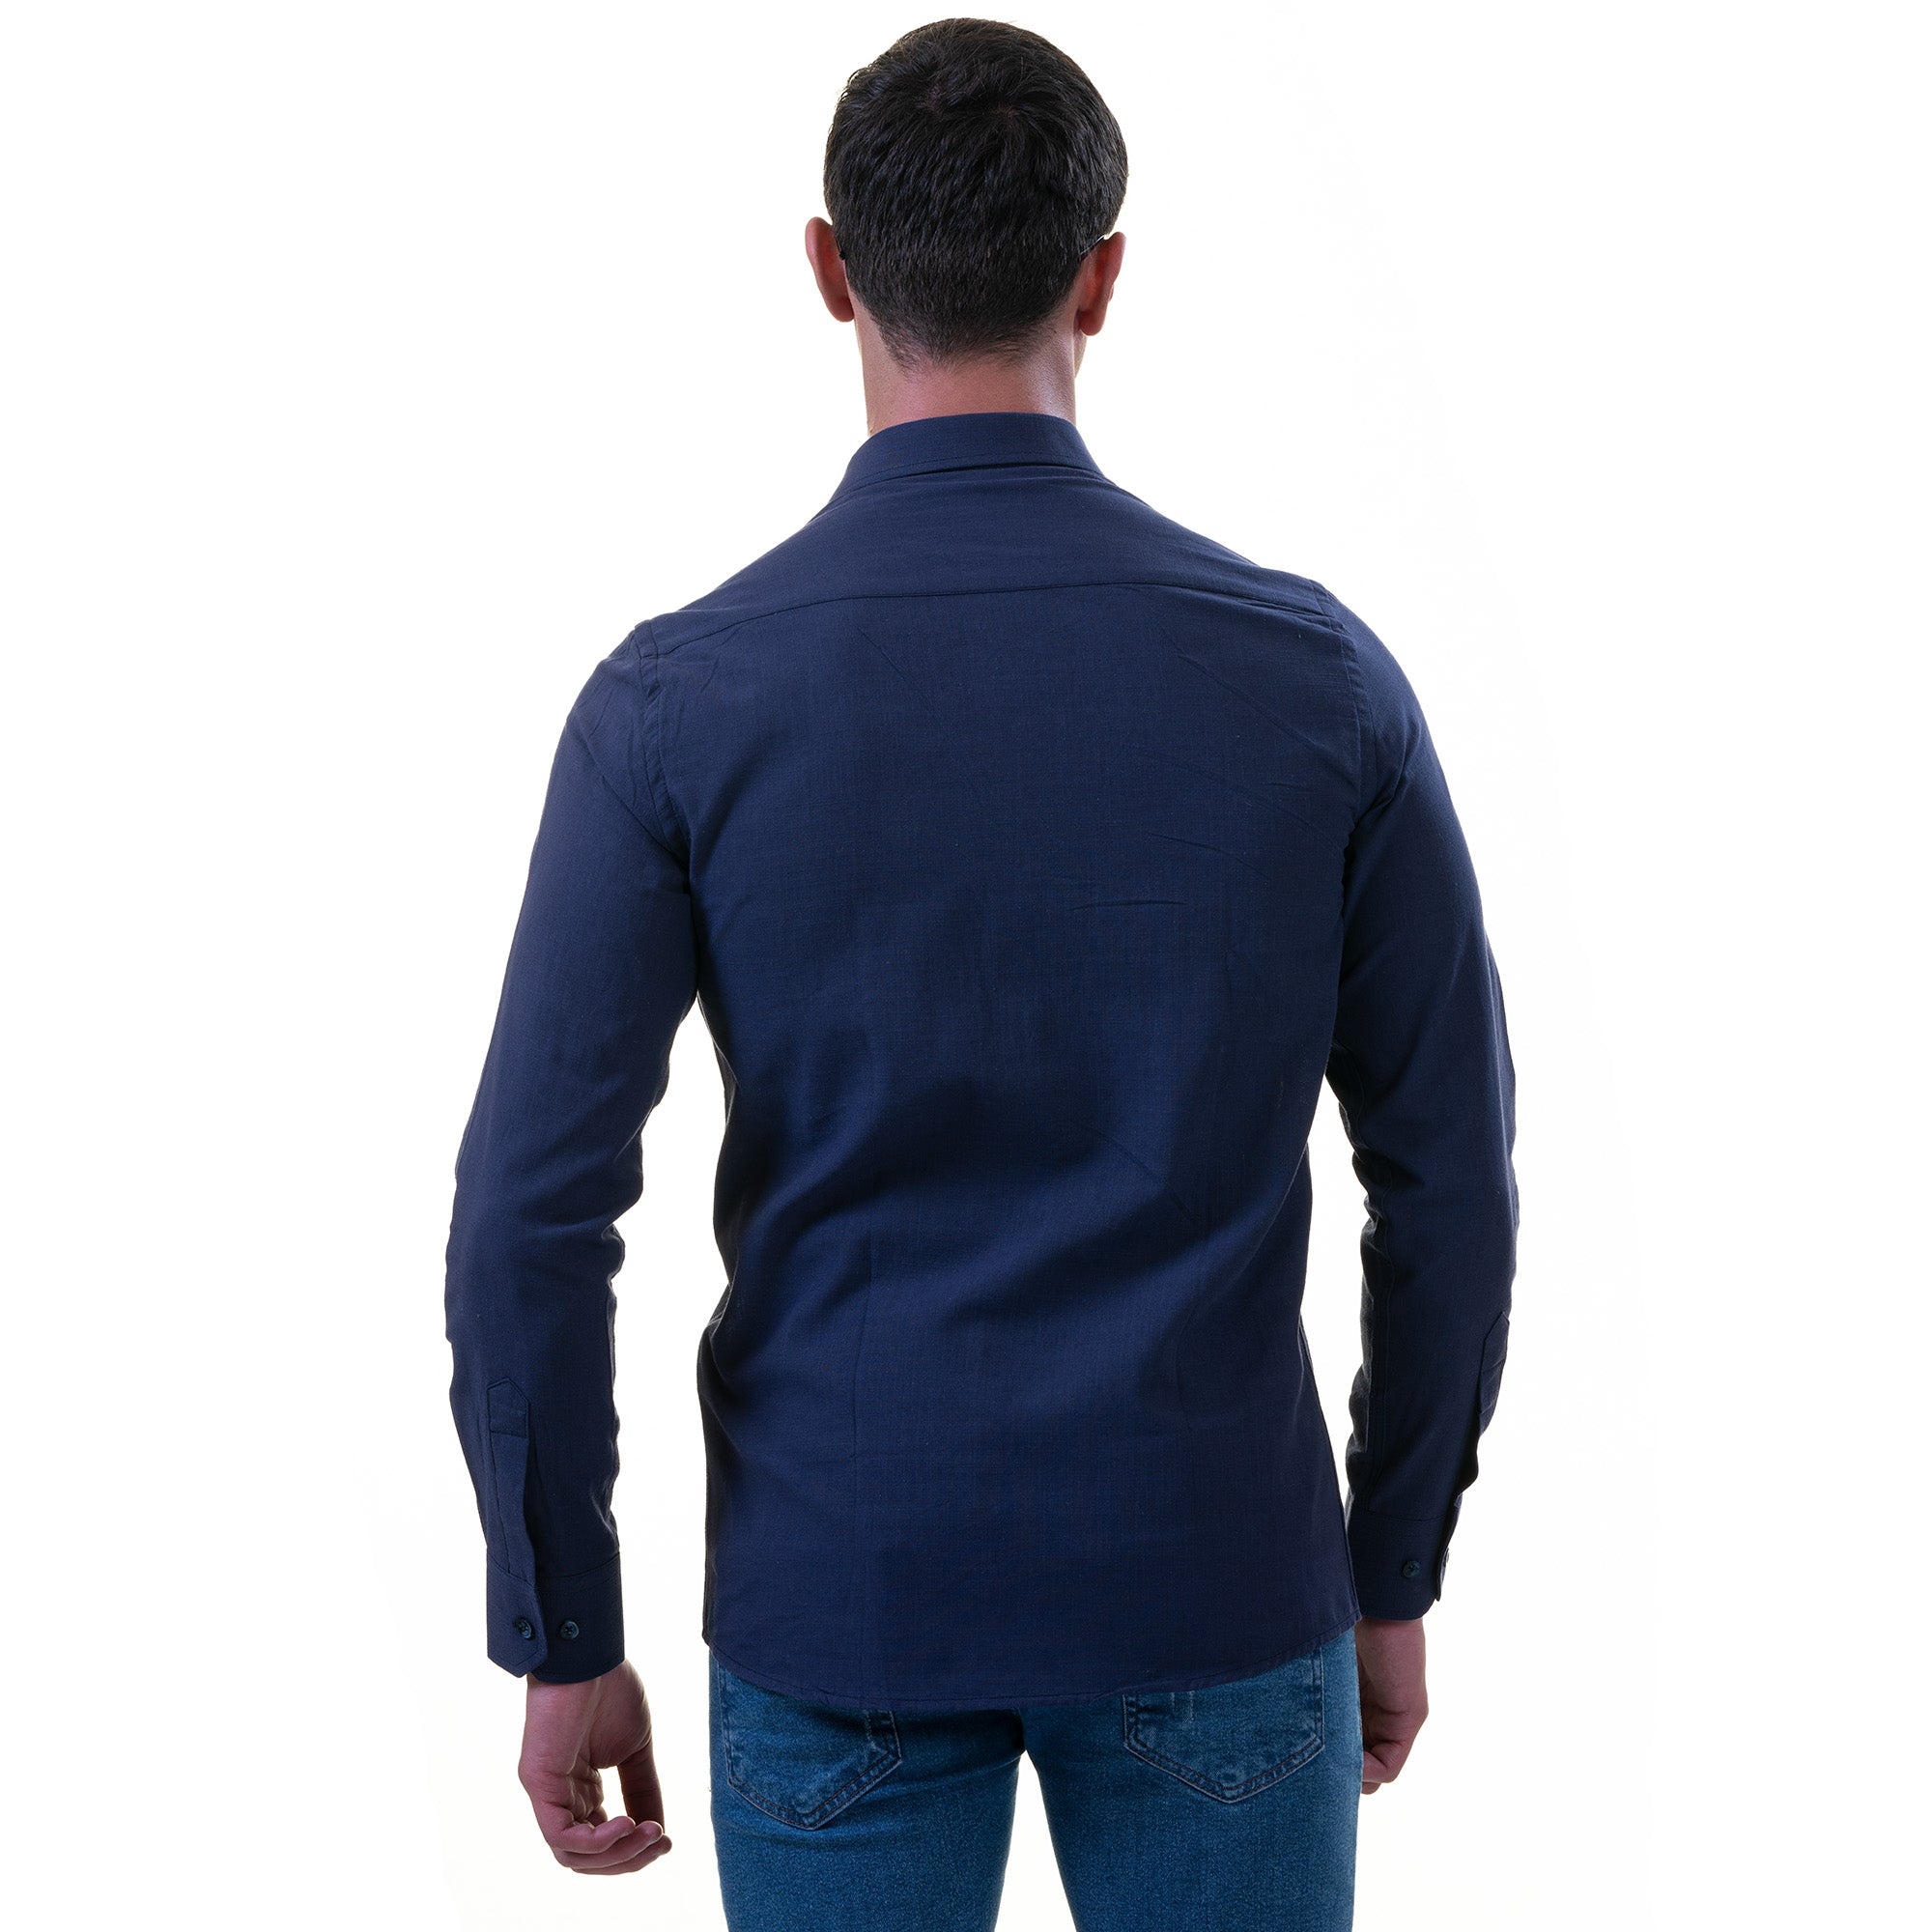 Dark Blue Luxury Men's Tailor Fit Button Up European Made Linen Shirts